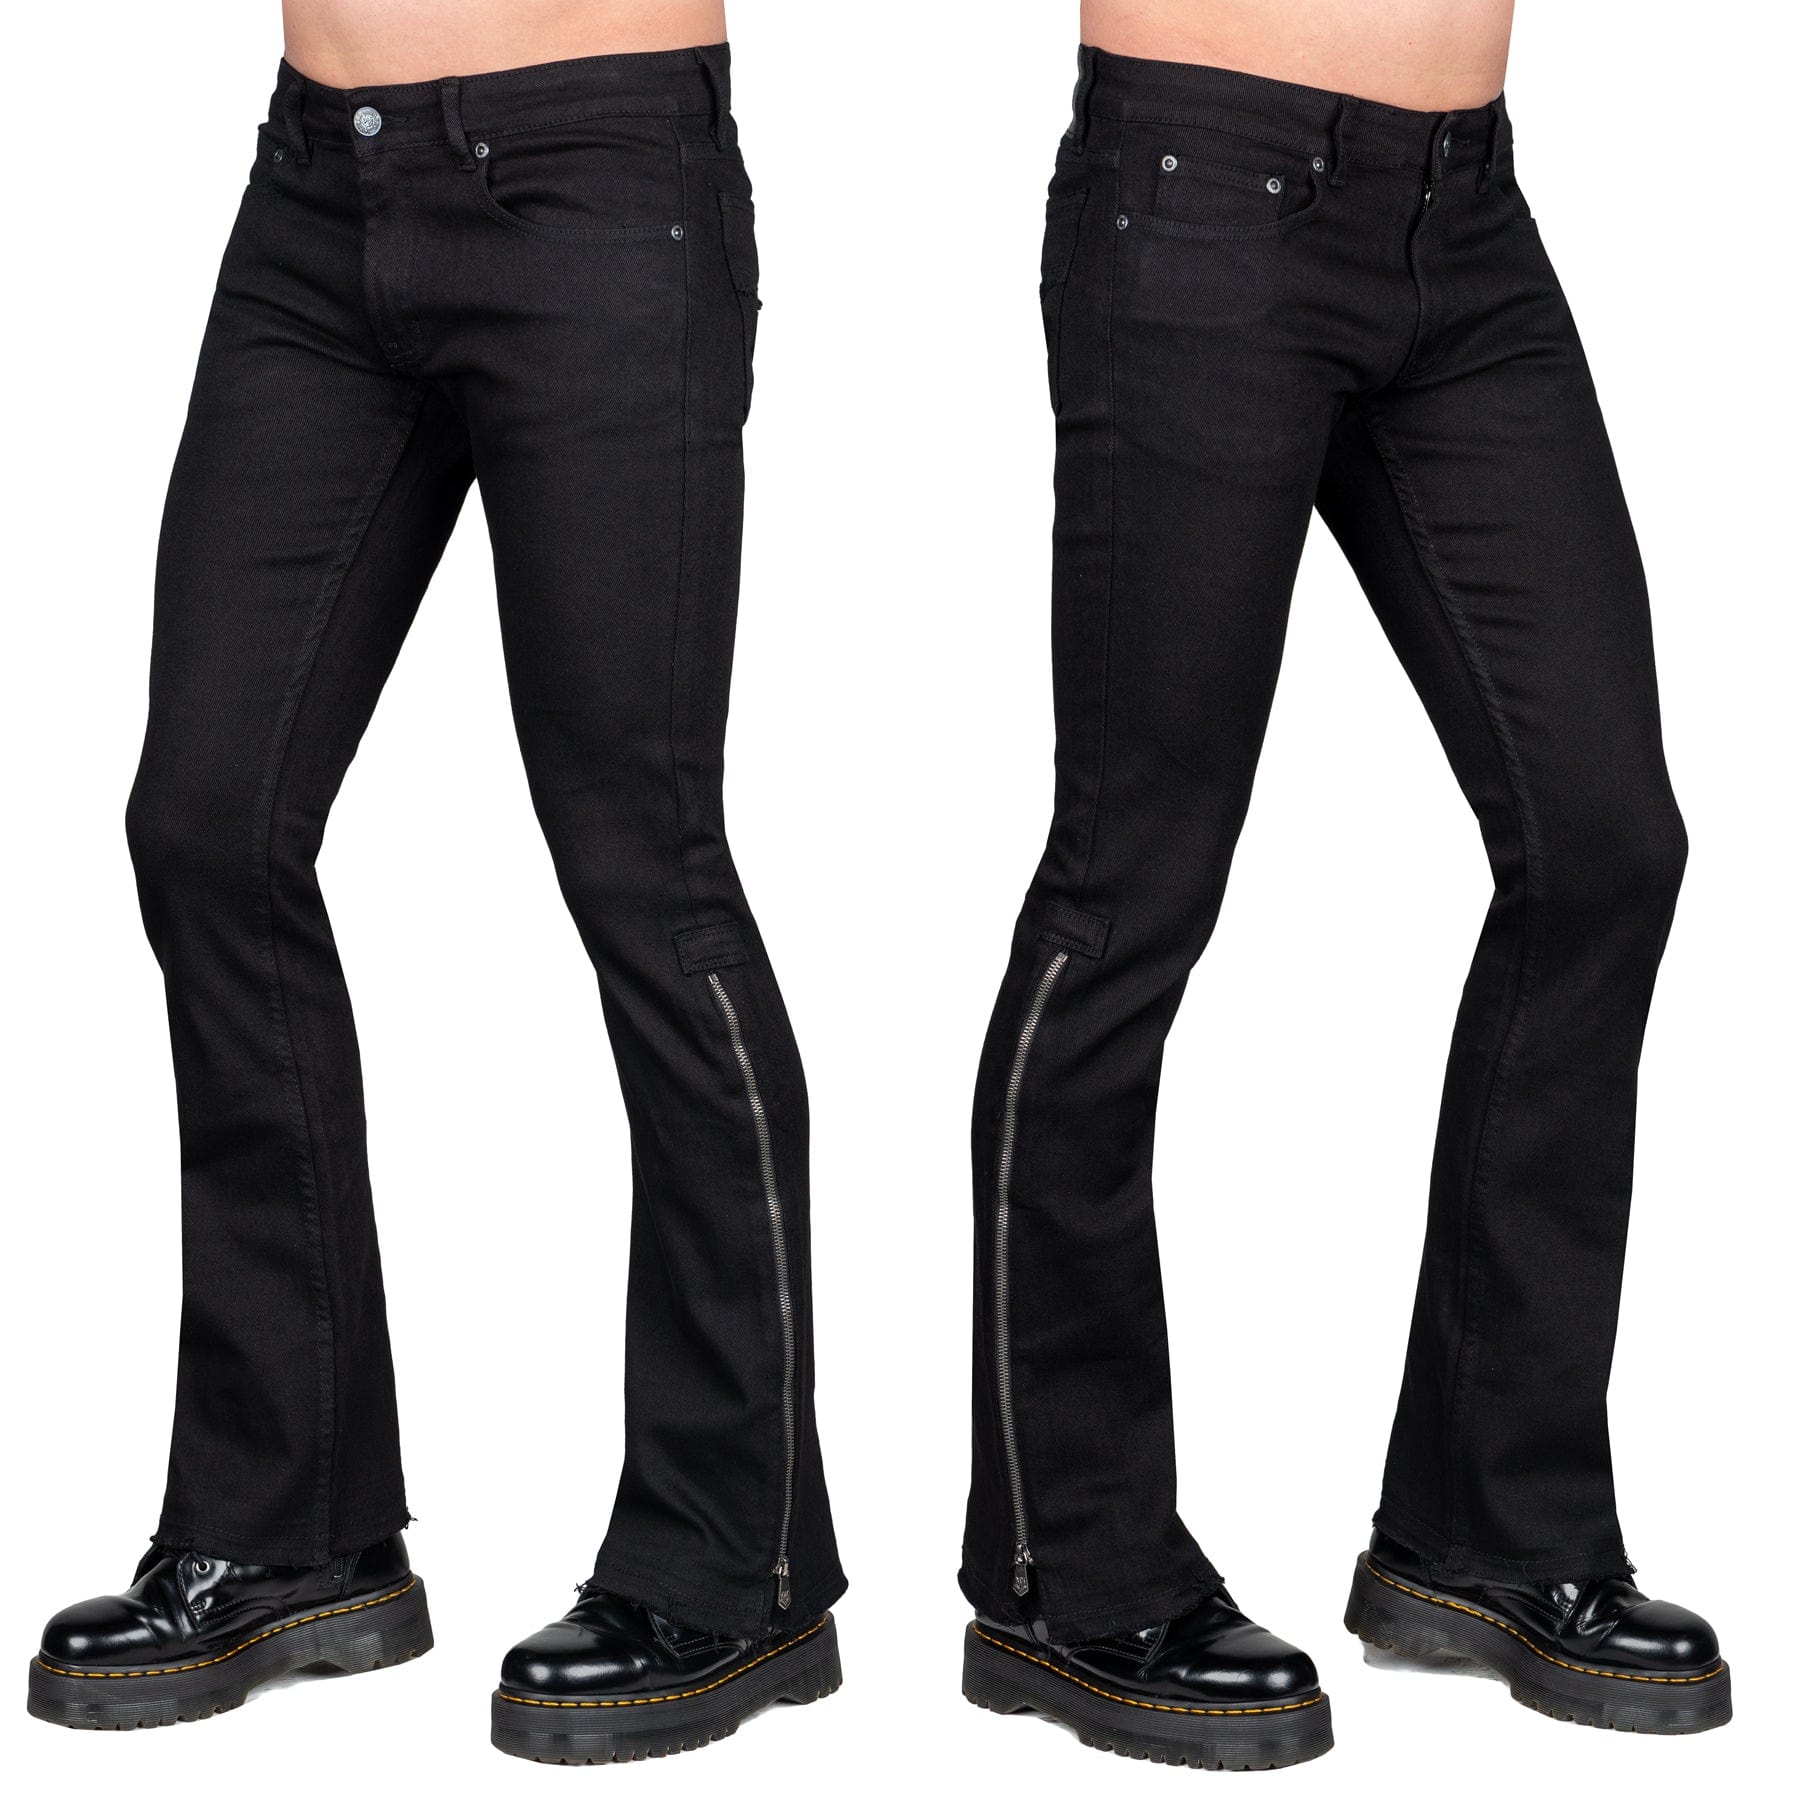 Wornstar Clothing Hellraiser Side Zipper Mens Jeans - Black